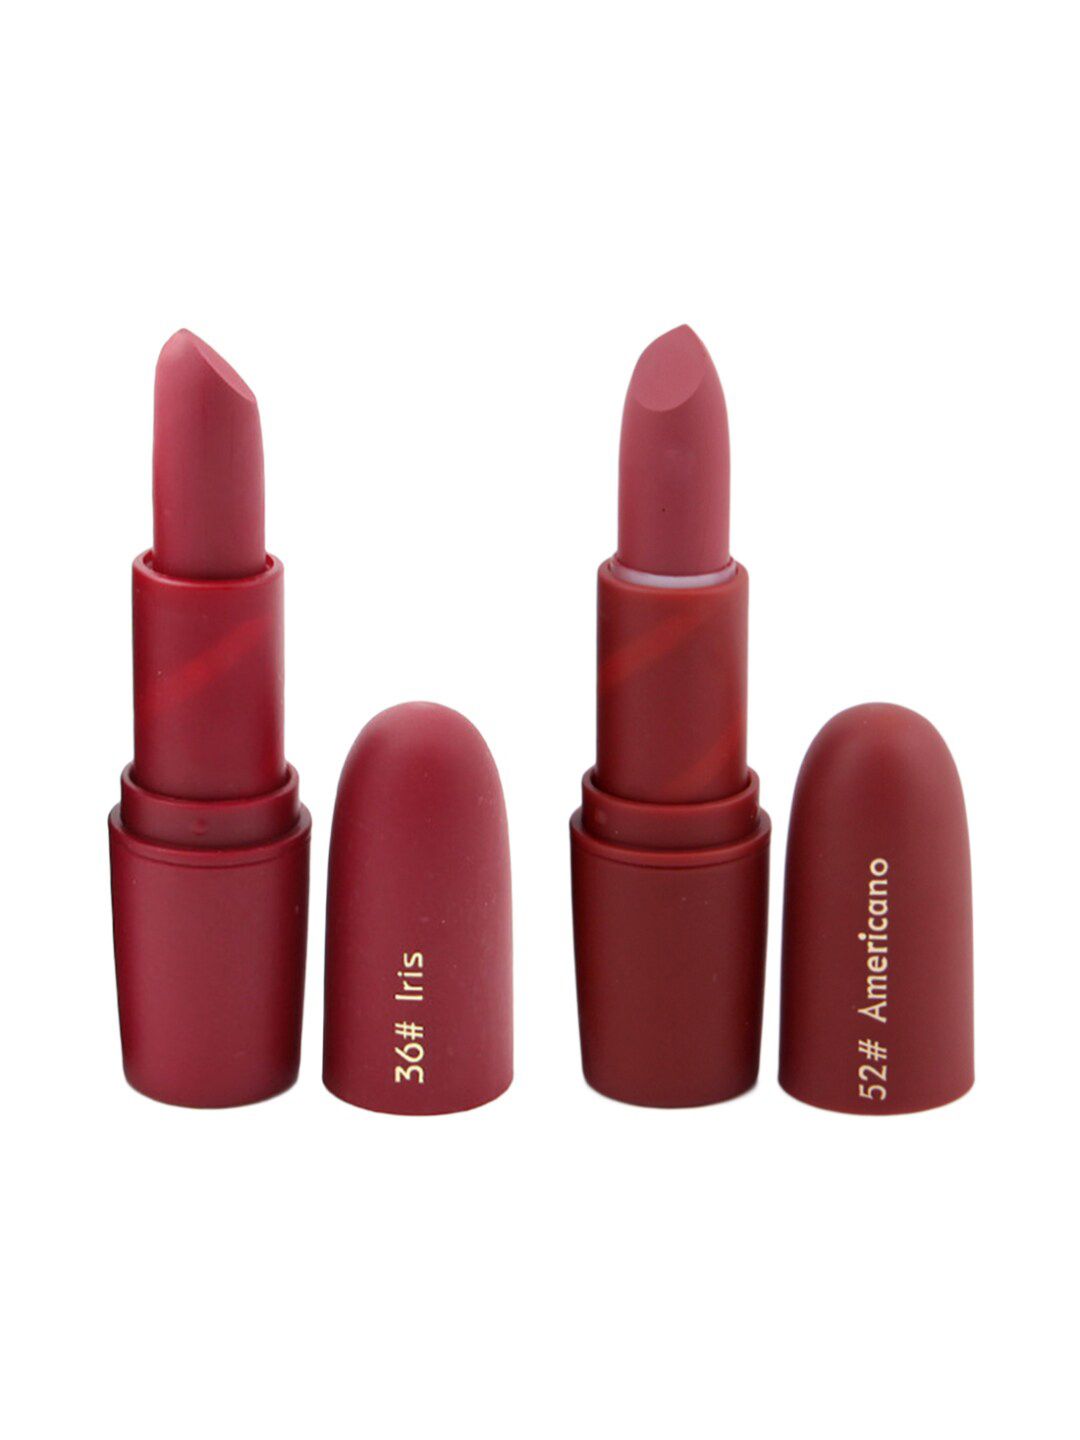 MISS ROSE Set of 2 Matte Creamy Lipsticks - Iris 36 & Americano 52 Price in India